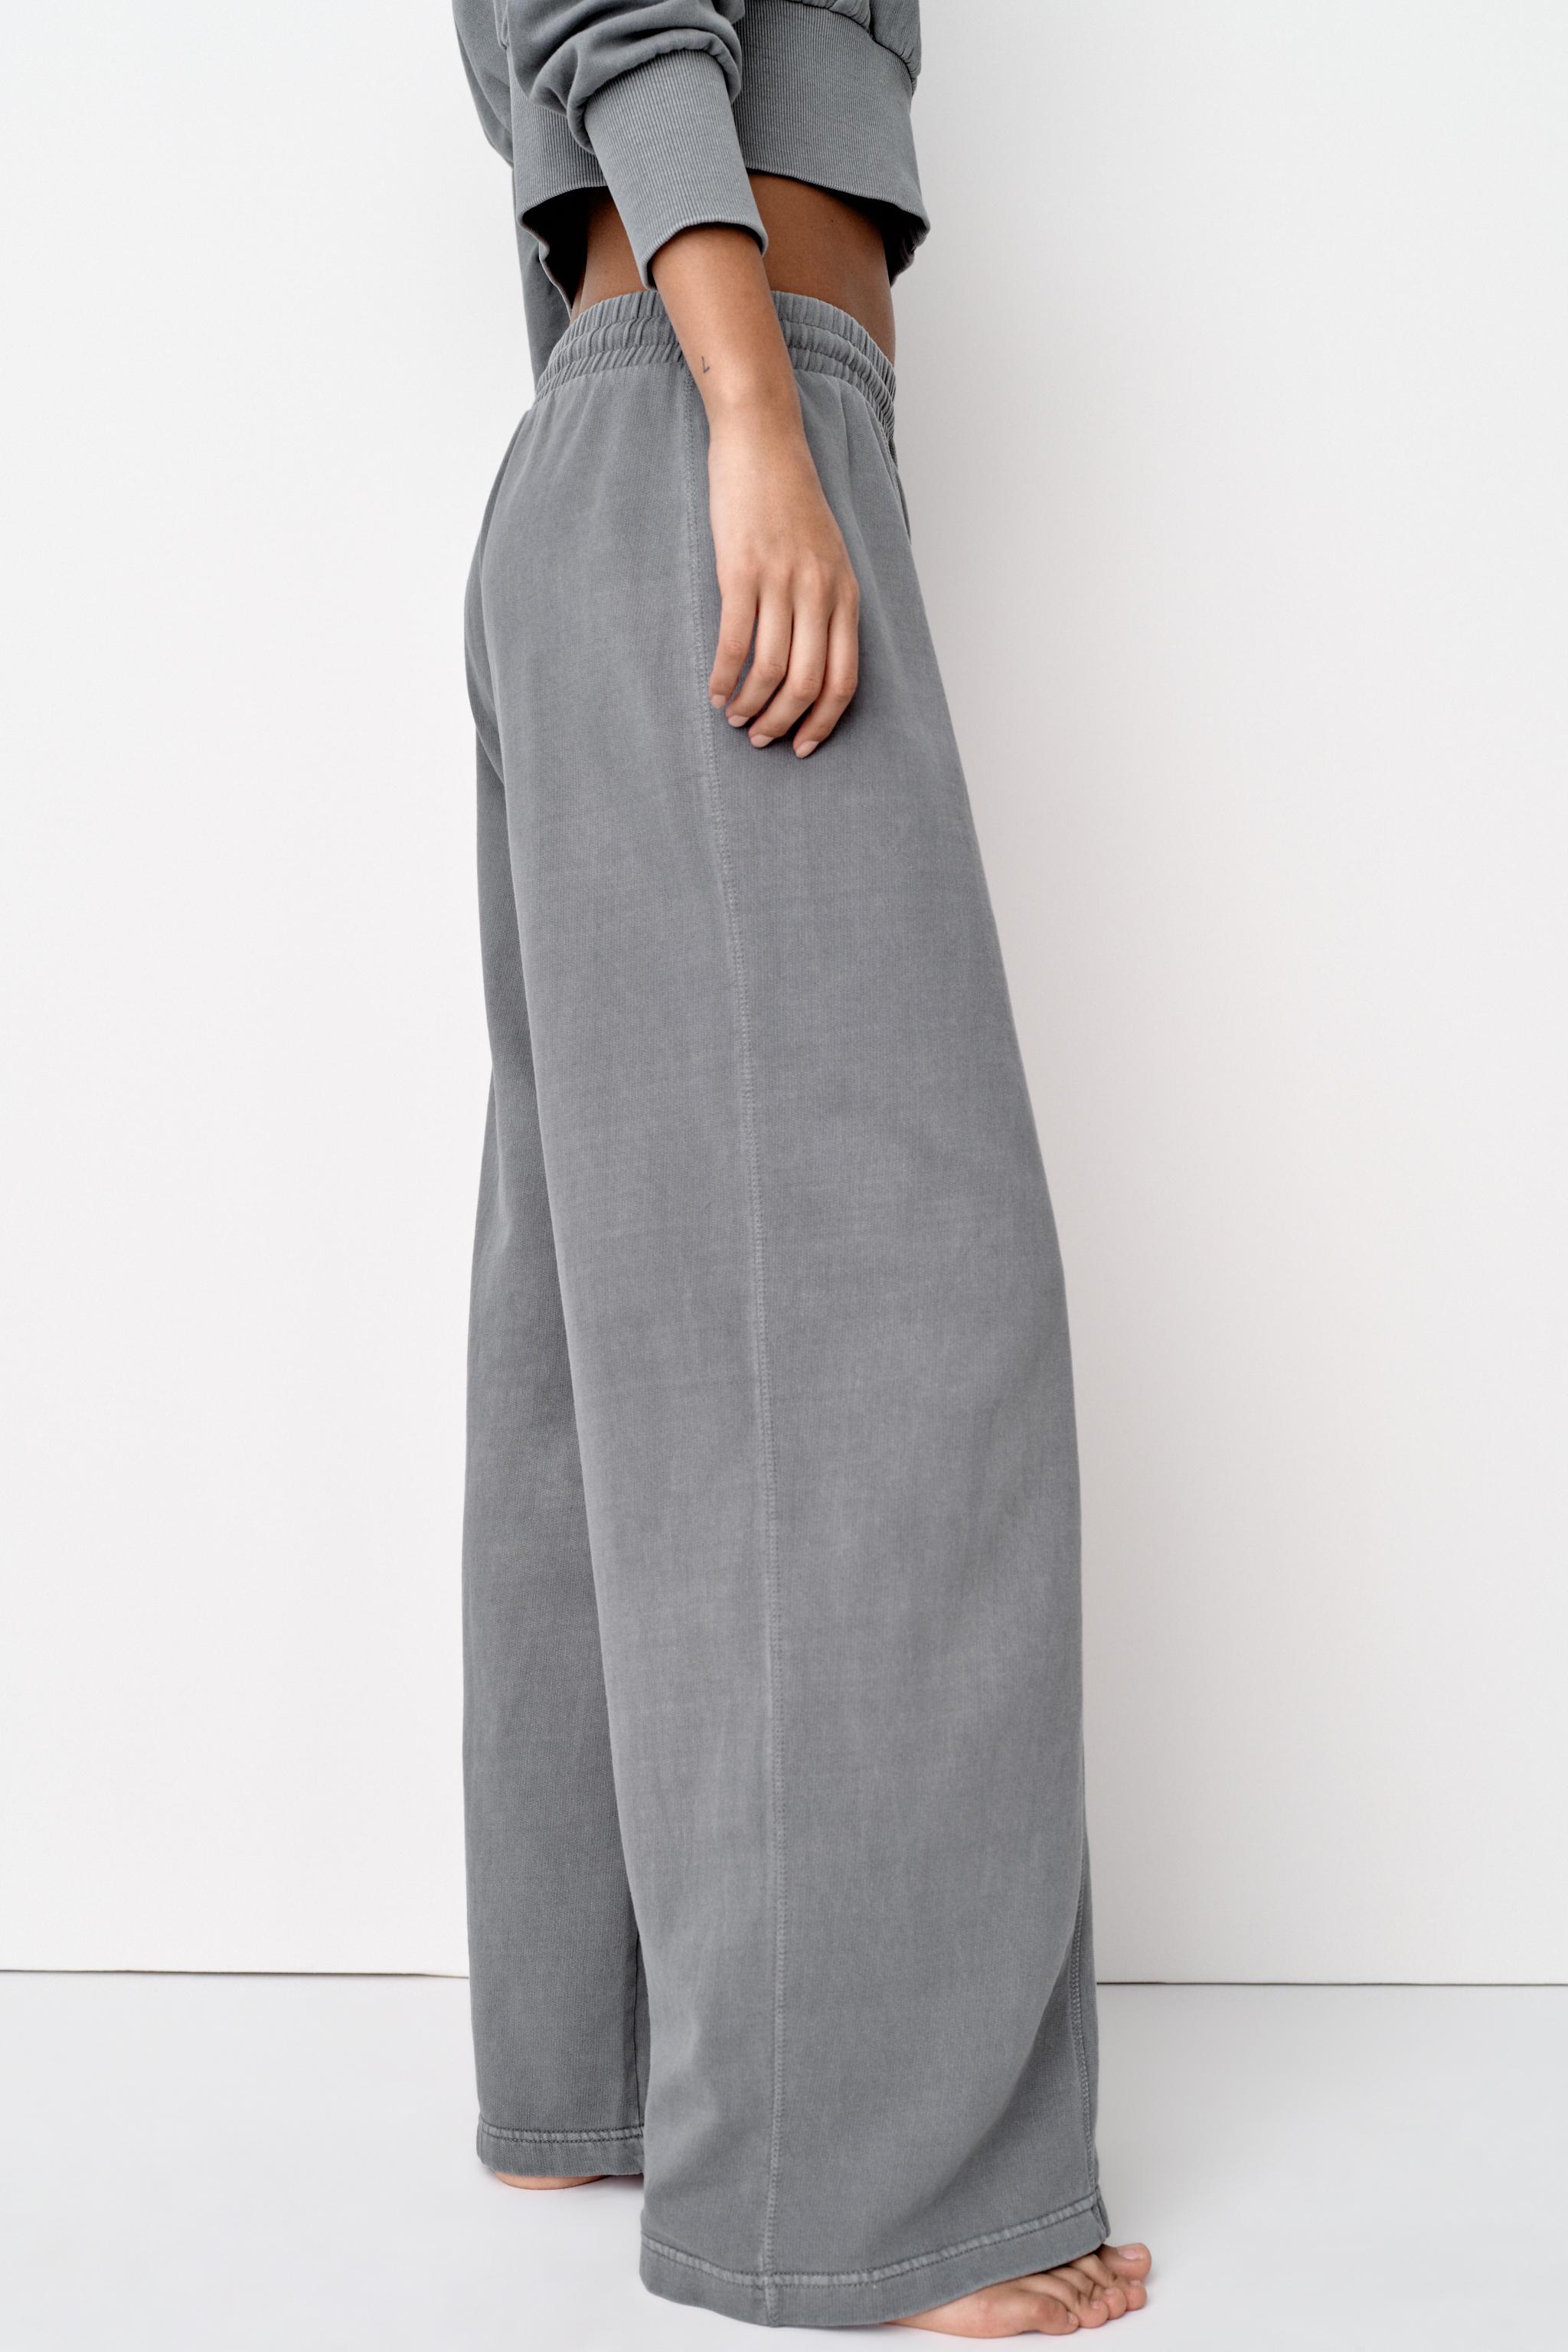 Zara Women High-waist trousers with belt 4387/030/712 (Small): Buy